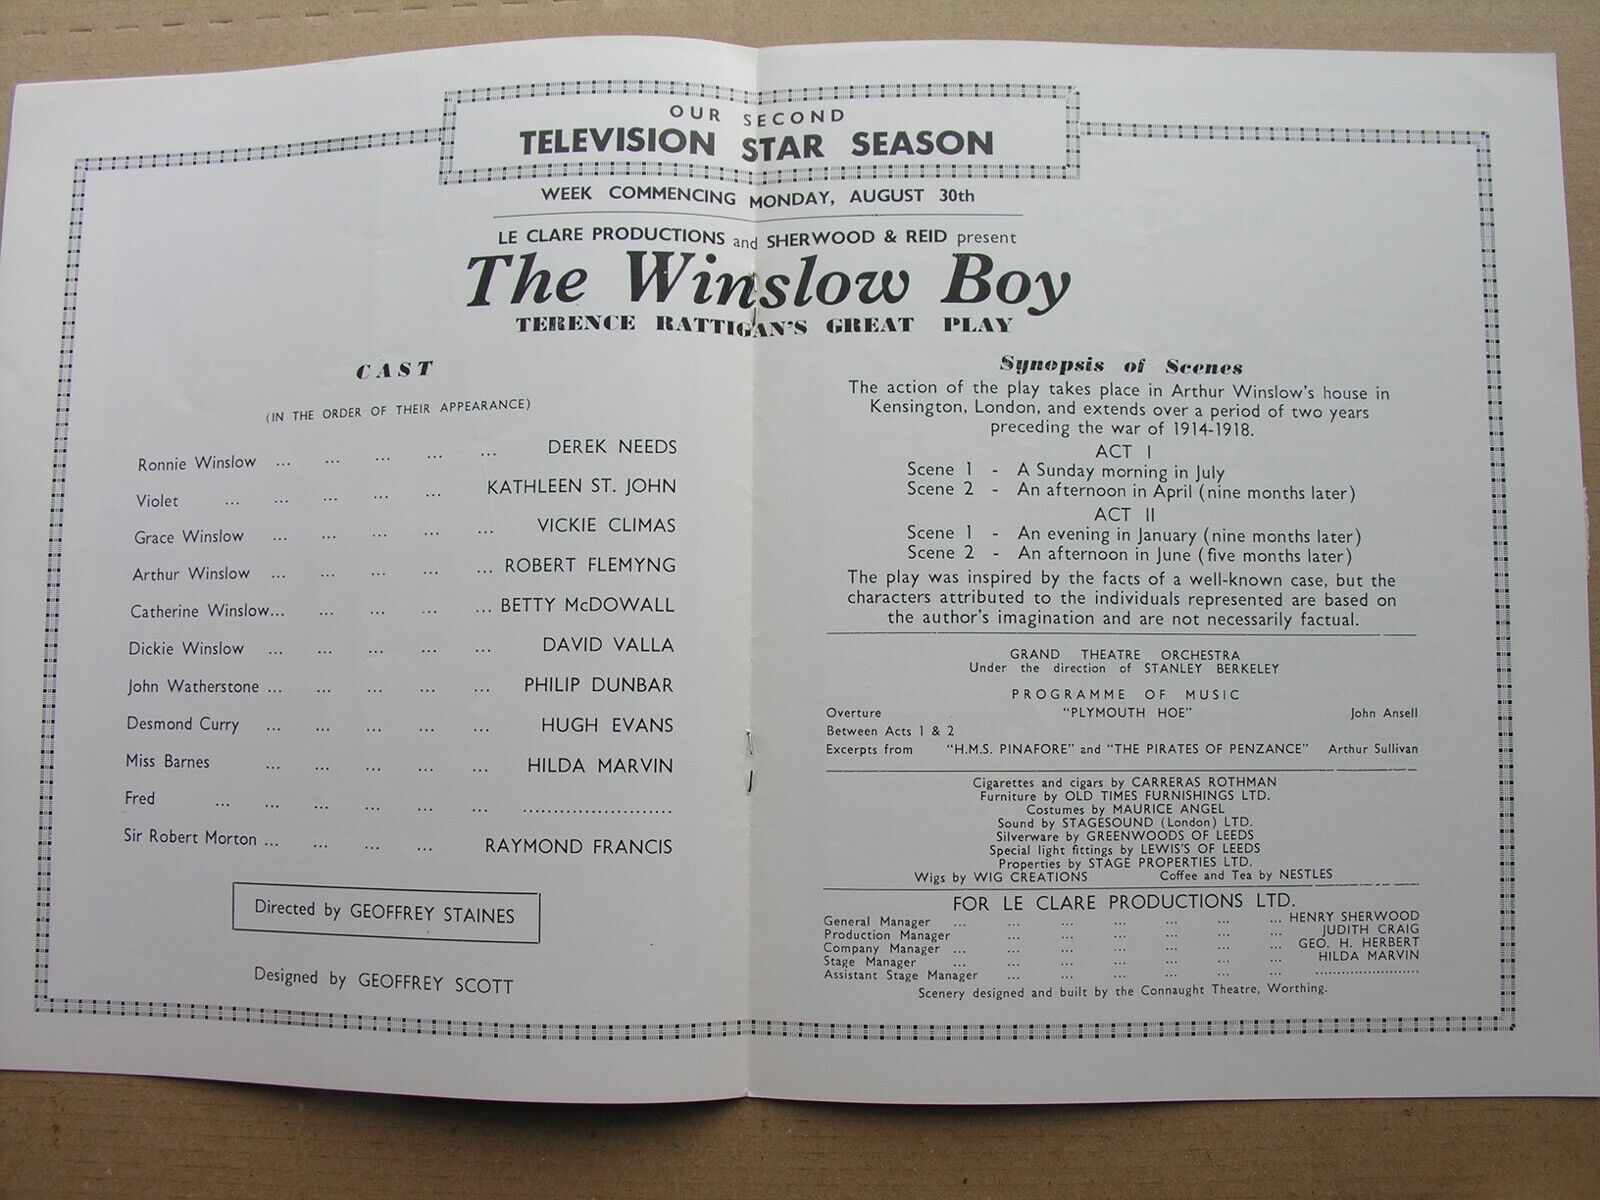 1965 THE WINSLOW BOY Rattigan Raymond Francis, Robert Flemyng, Betty McDowall